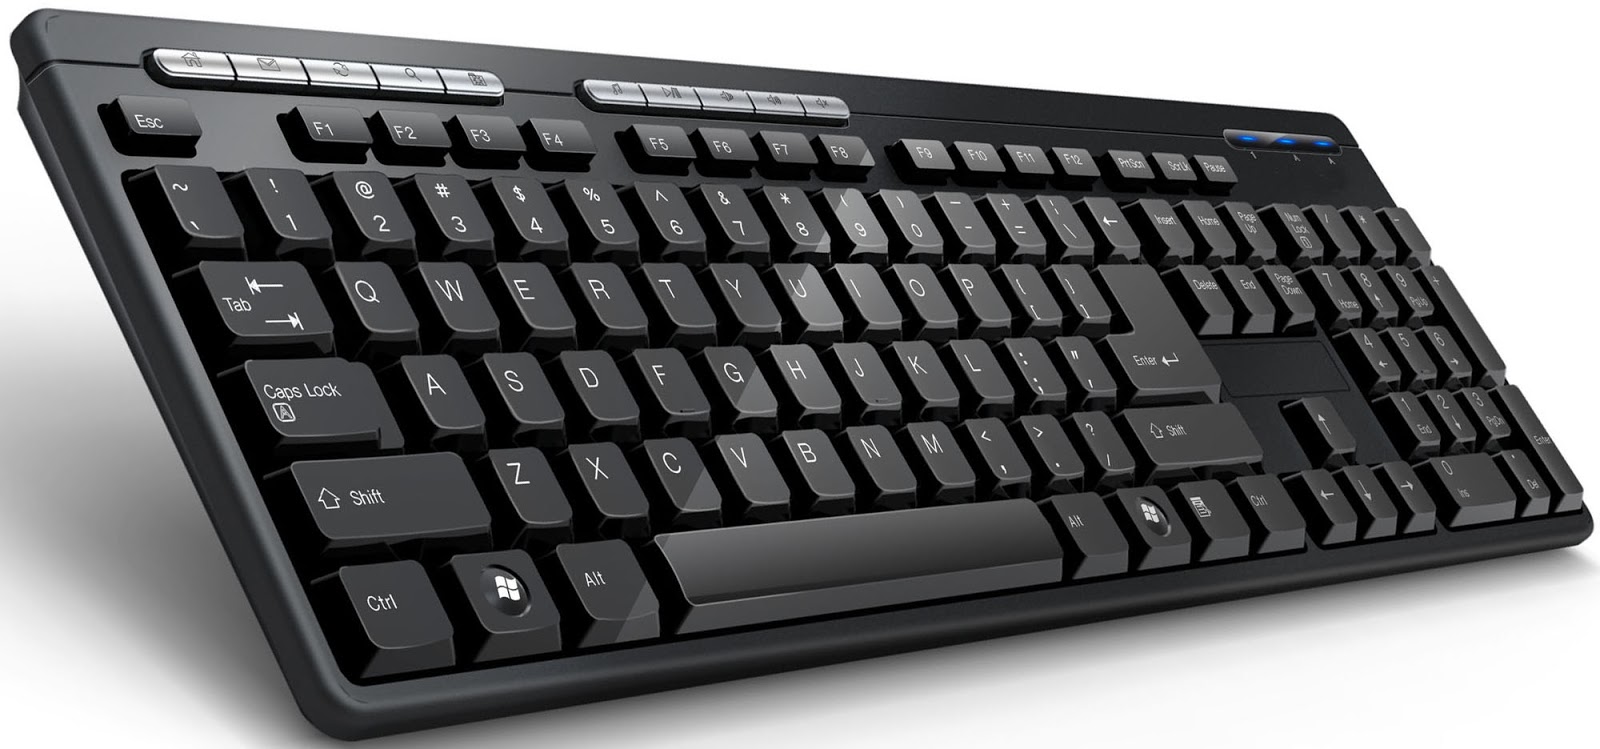 daftar harga keyboard komputer terbaru Daftar Info